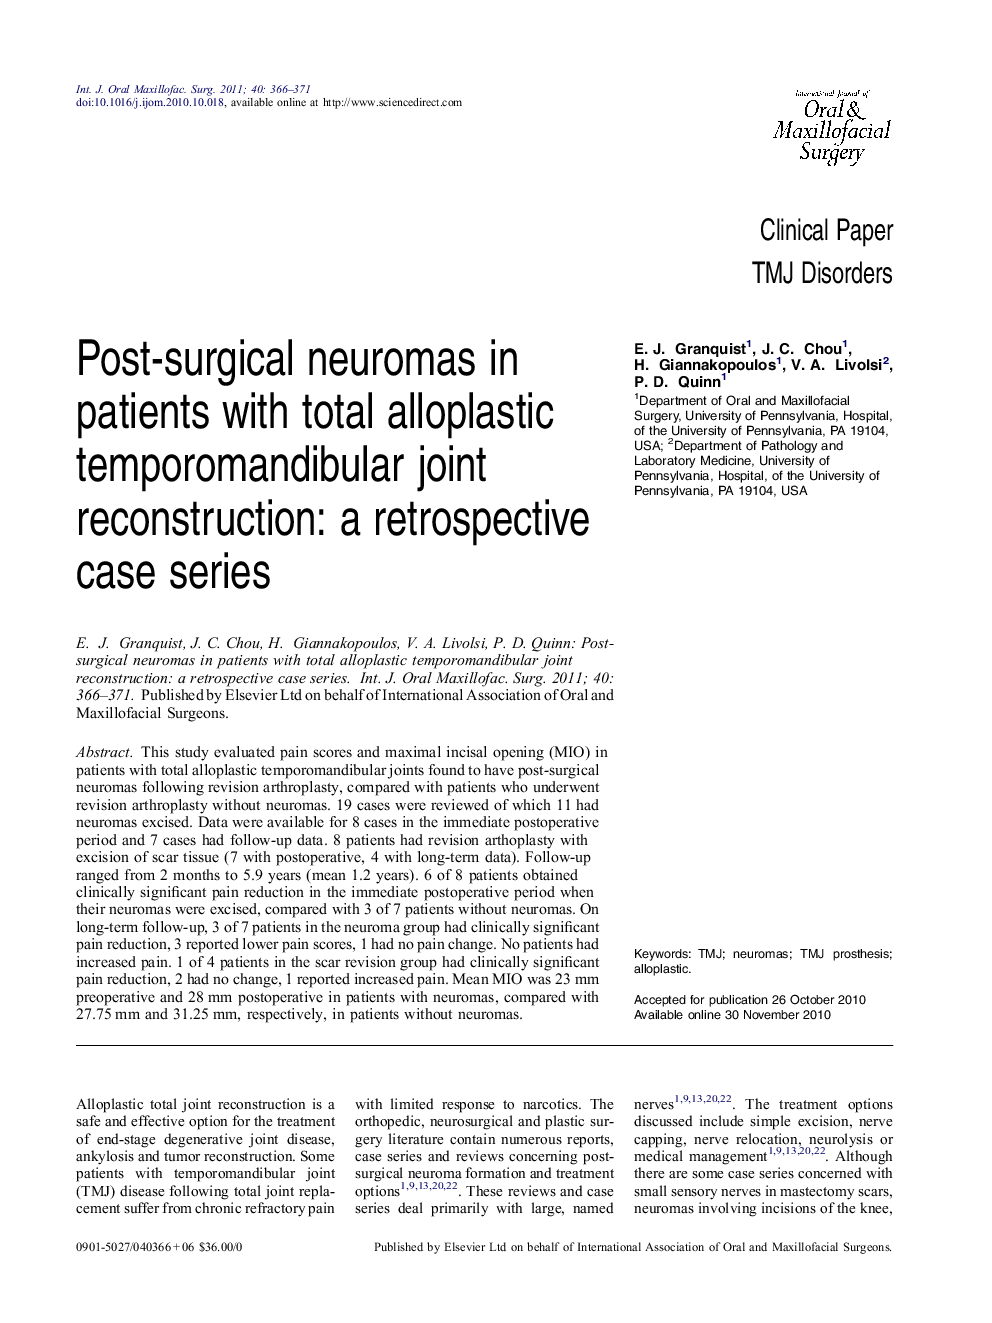 Post-surgical neuromas in patients with total alloplastic temporomandibular joint reconstruction: a retrospective case series